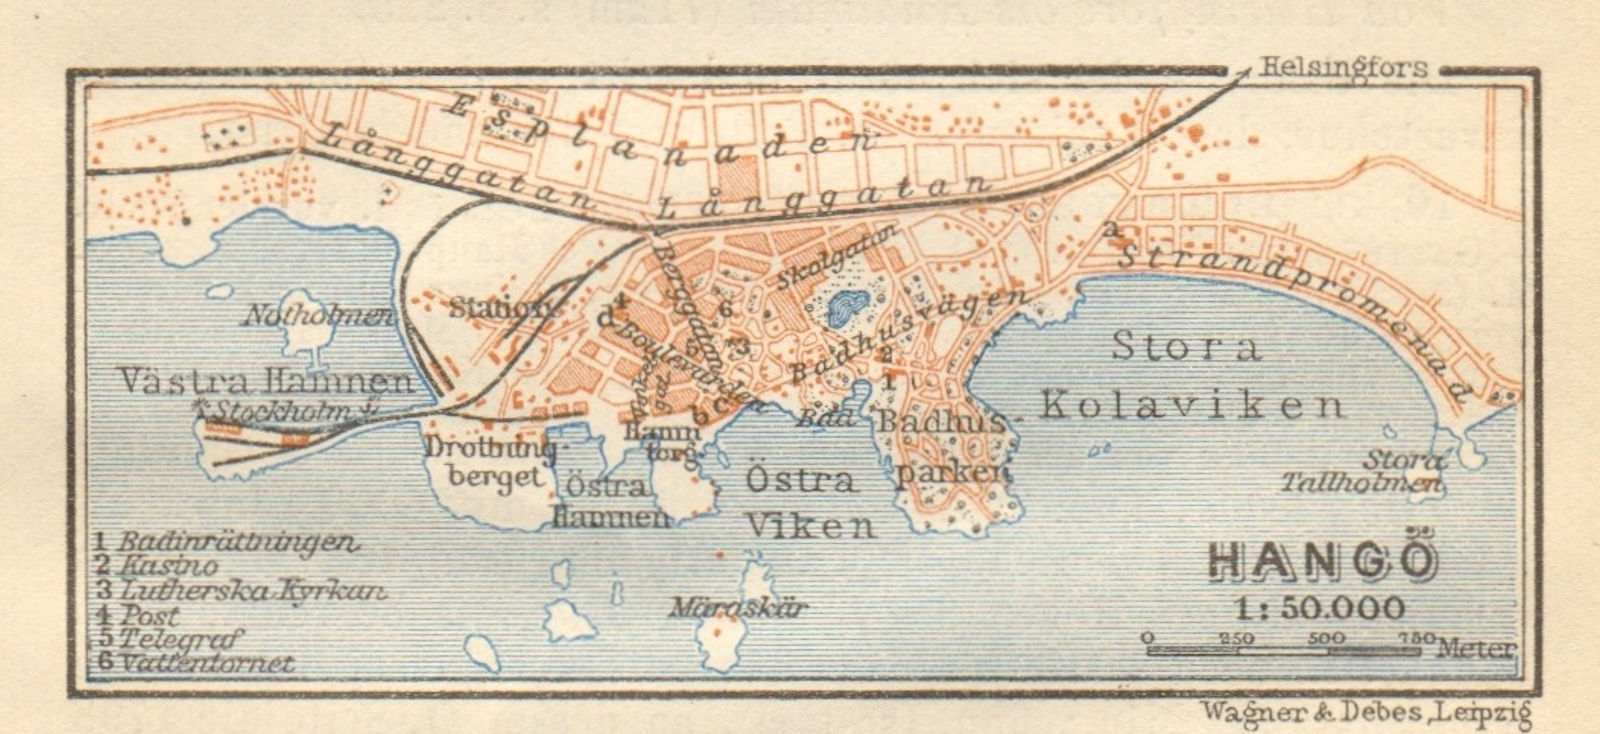 Hanko / Hango town / city plan. Finland. VERY SMALL. BAEDEKER 1912 old map